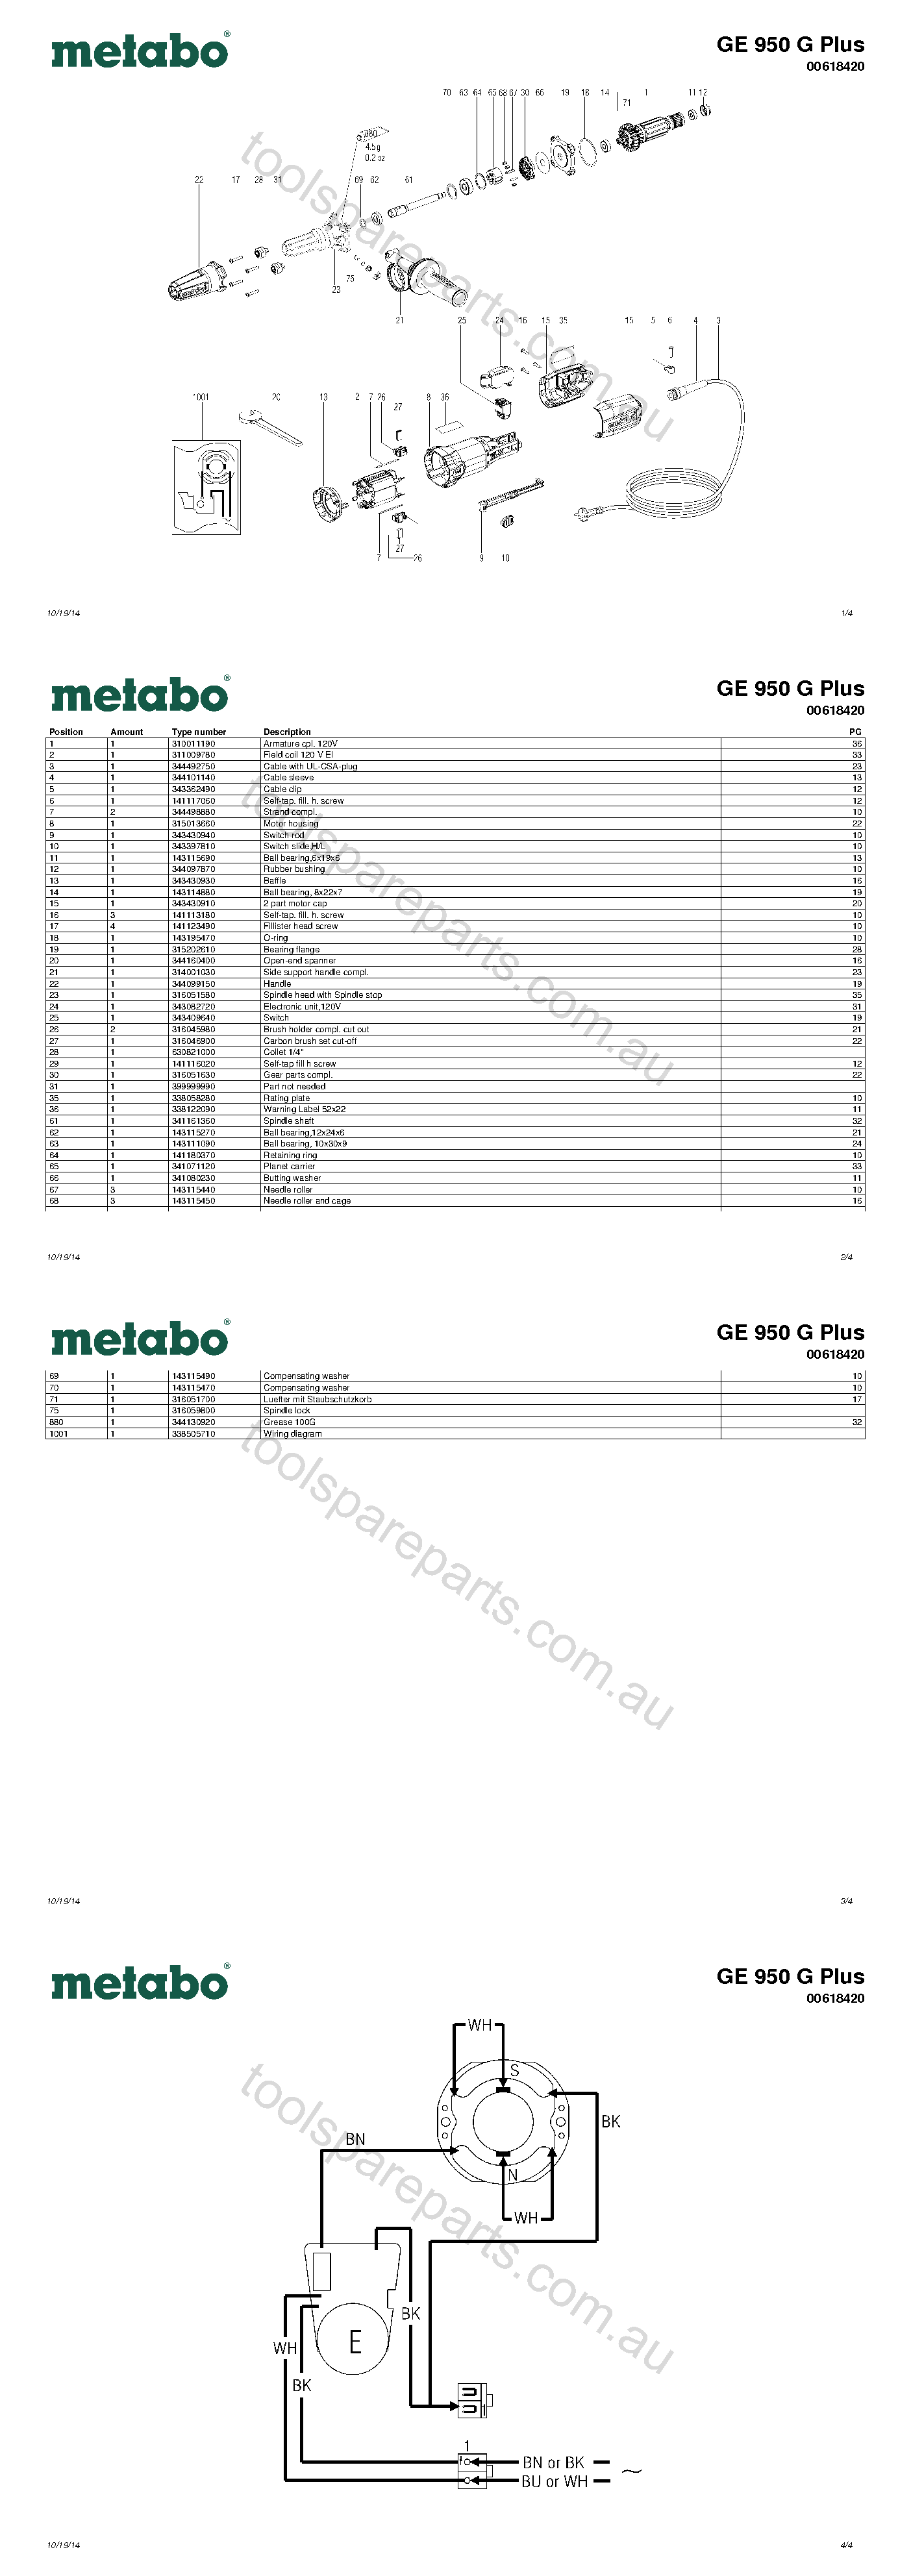 Metabo GE 950 G Plus 00618420  Diagram 1